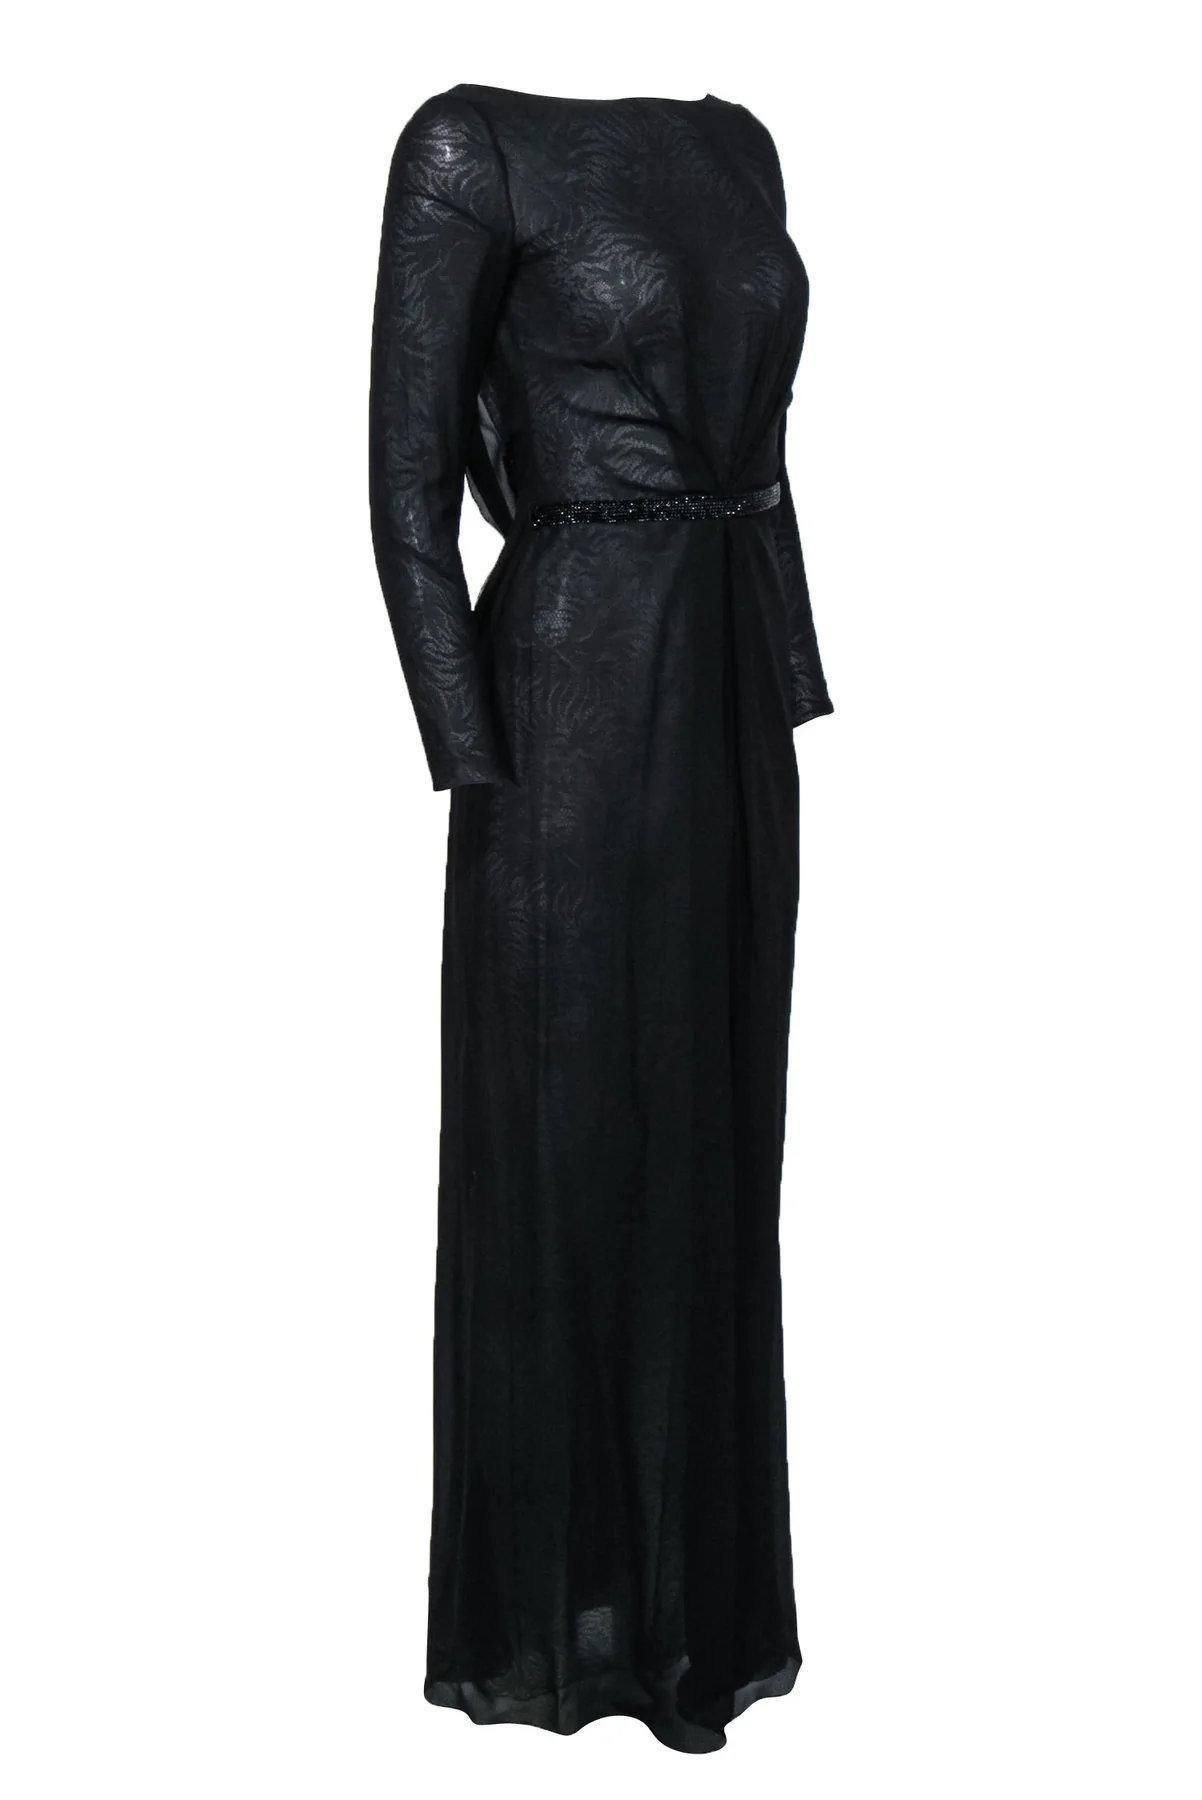 F/W2000 Vintage Gianni Versace Couture Crystal Embellished Black Lace Silk Dress
Open Back
Crystal belt
Sleeve length 23.5